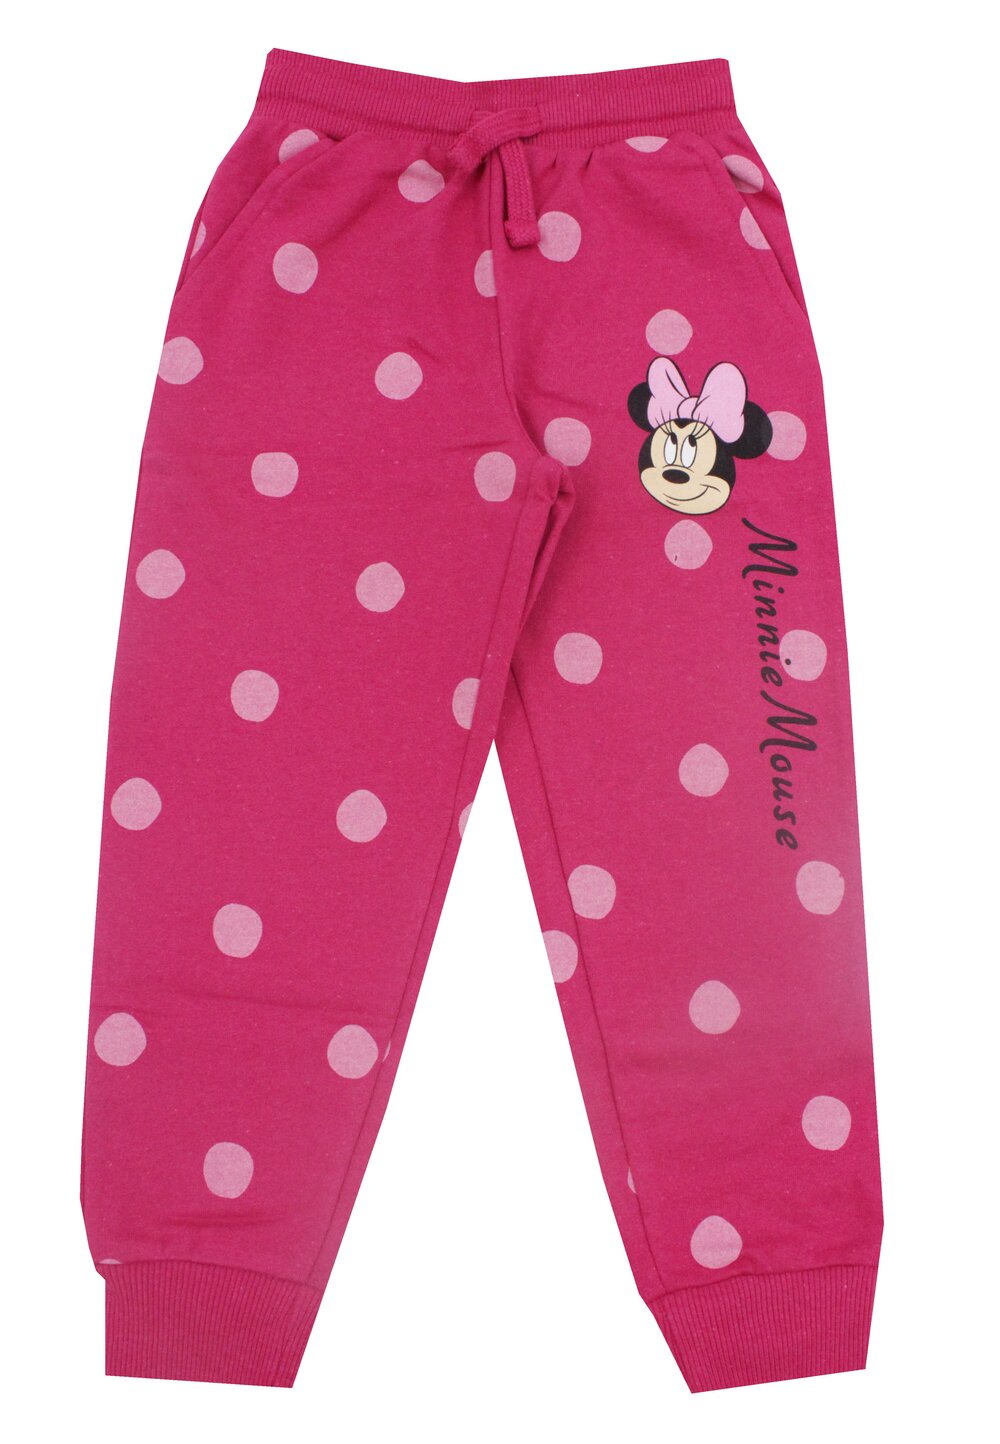 Pantaloni trening, bumbac, Minnie Mouse, roz cu buline